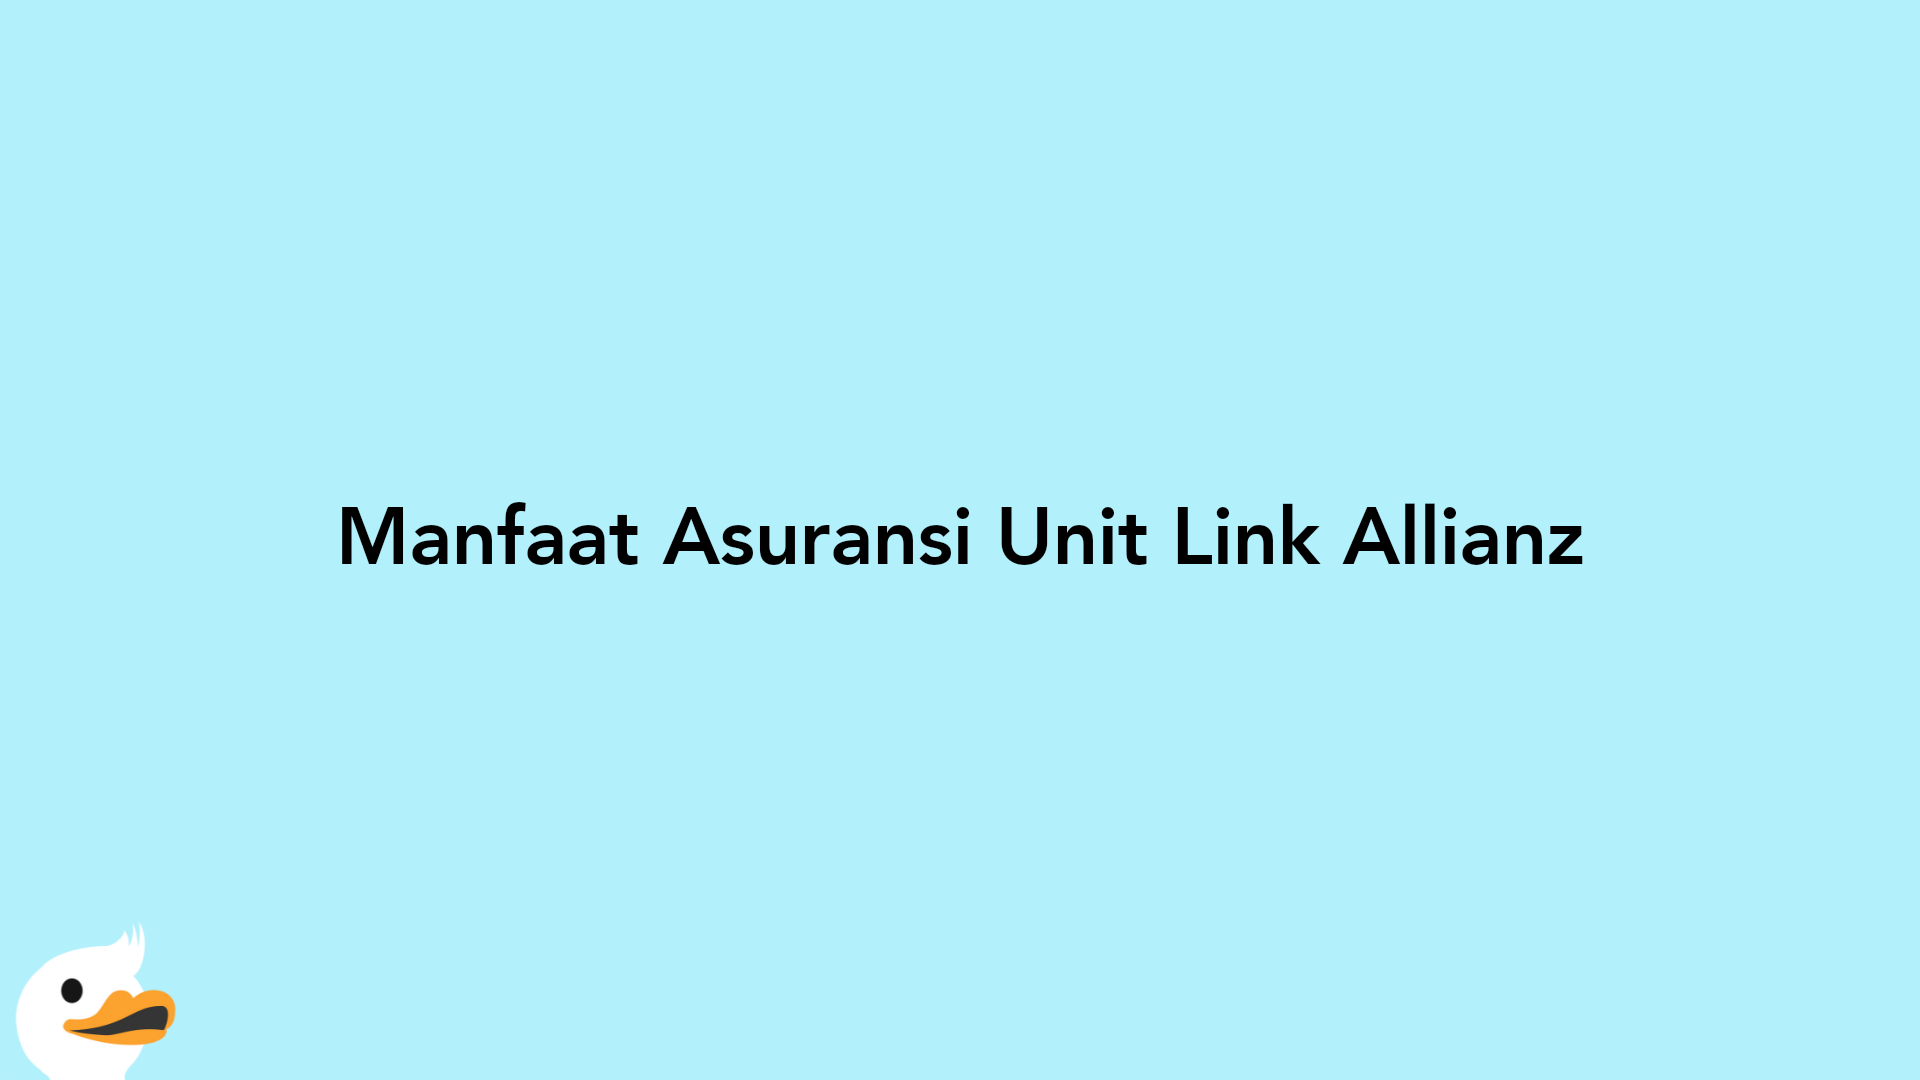 Manfaat Asuransi Unit Link Allianz